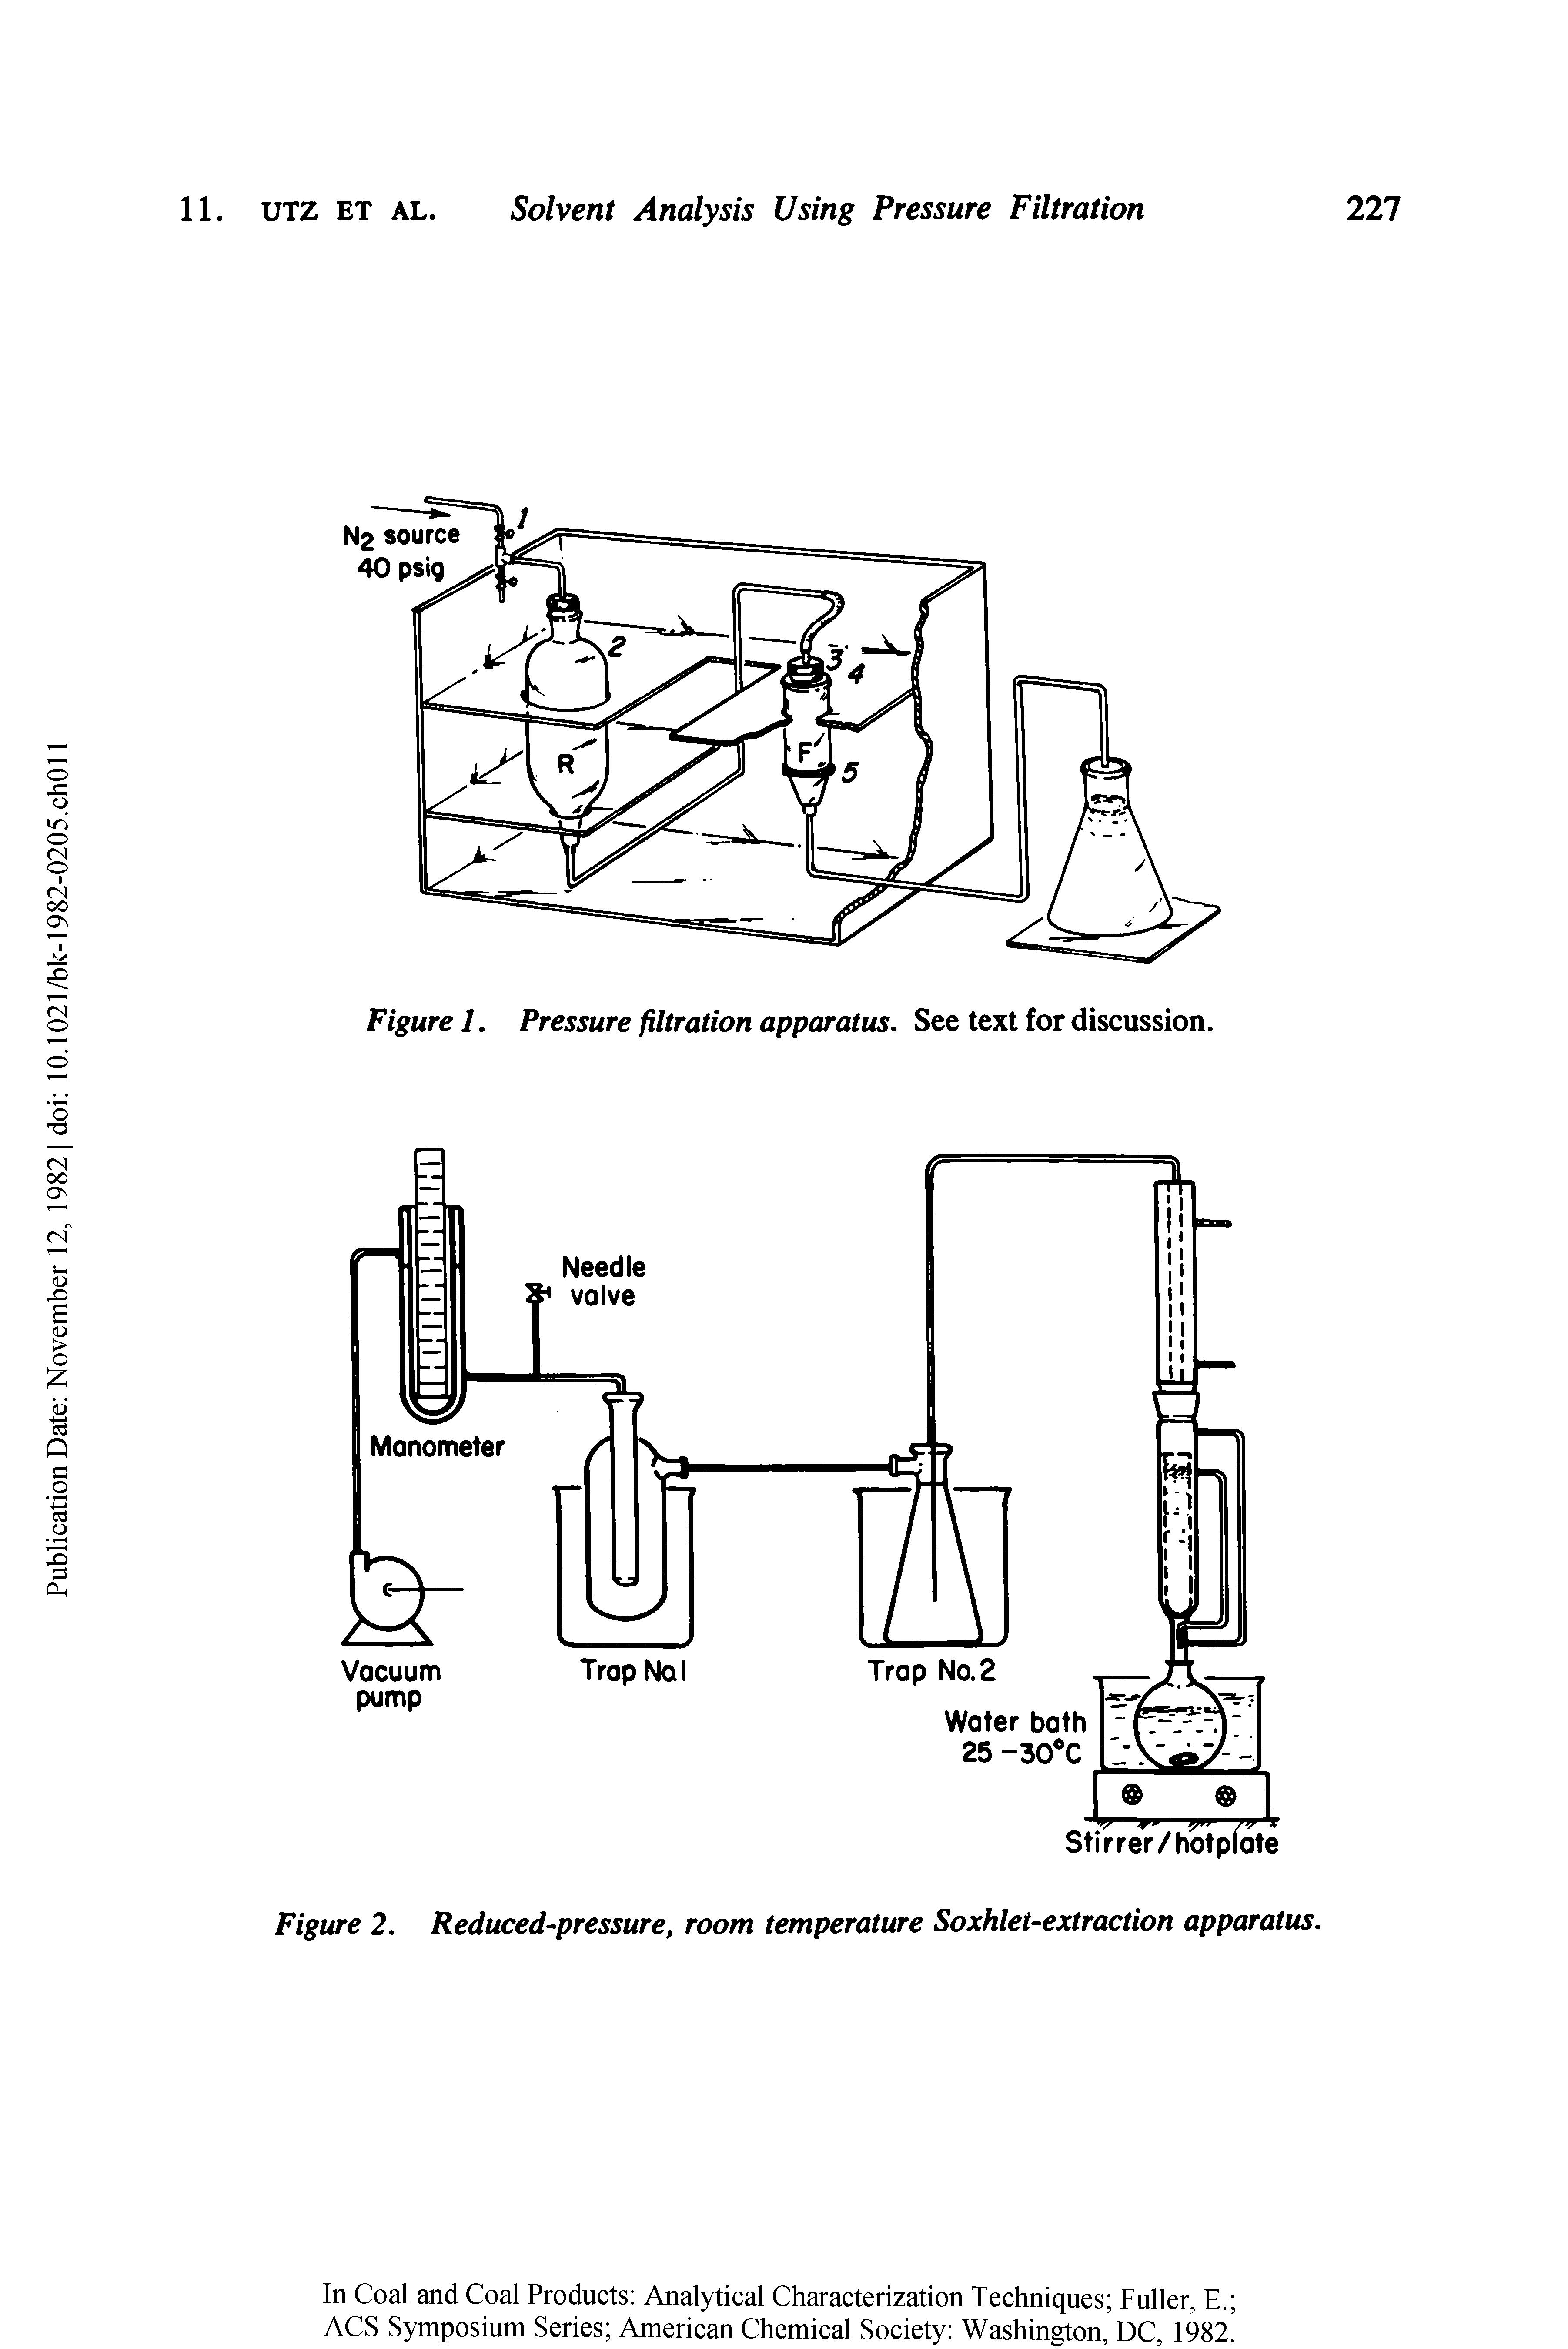 Figure 2. Reduced-pressure, room temperature Soxhlet-extraction apparatus.